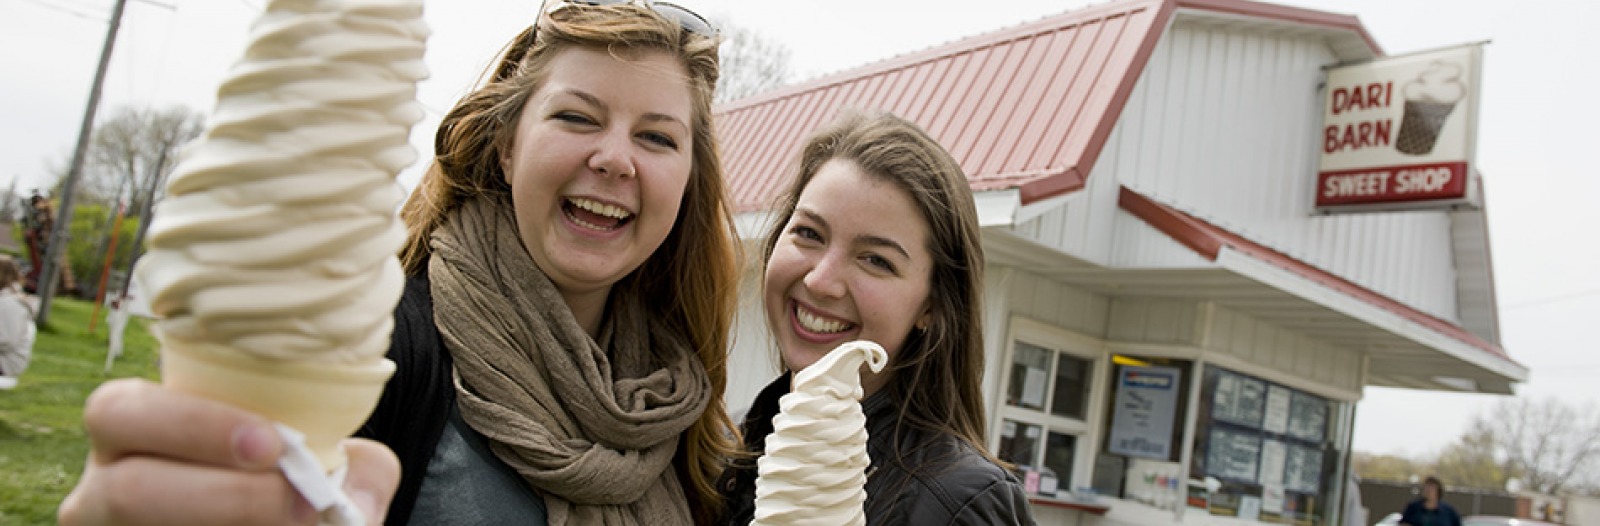 Two smiling customers hold Dari Barn ice cream cones.